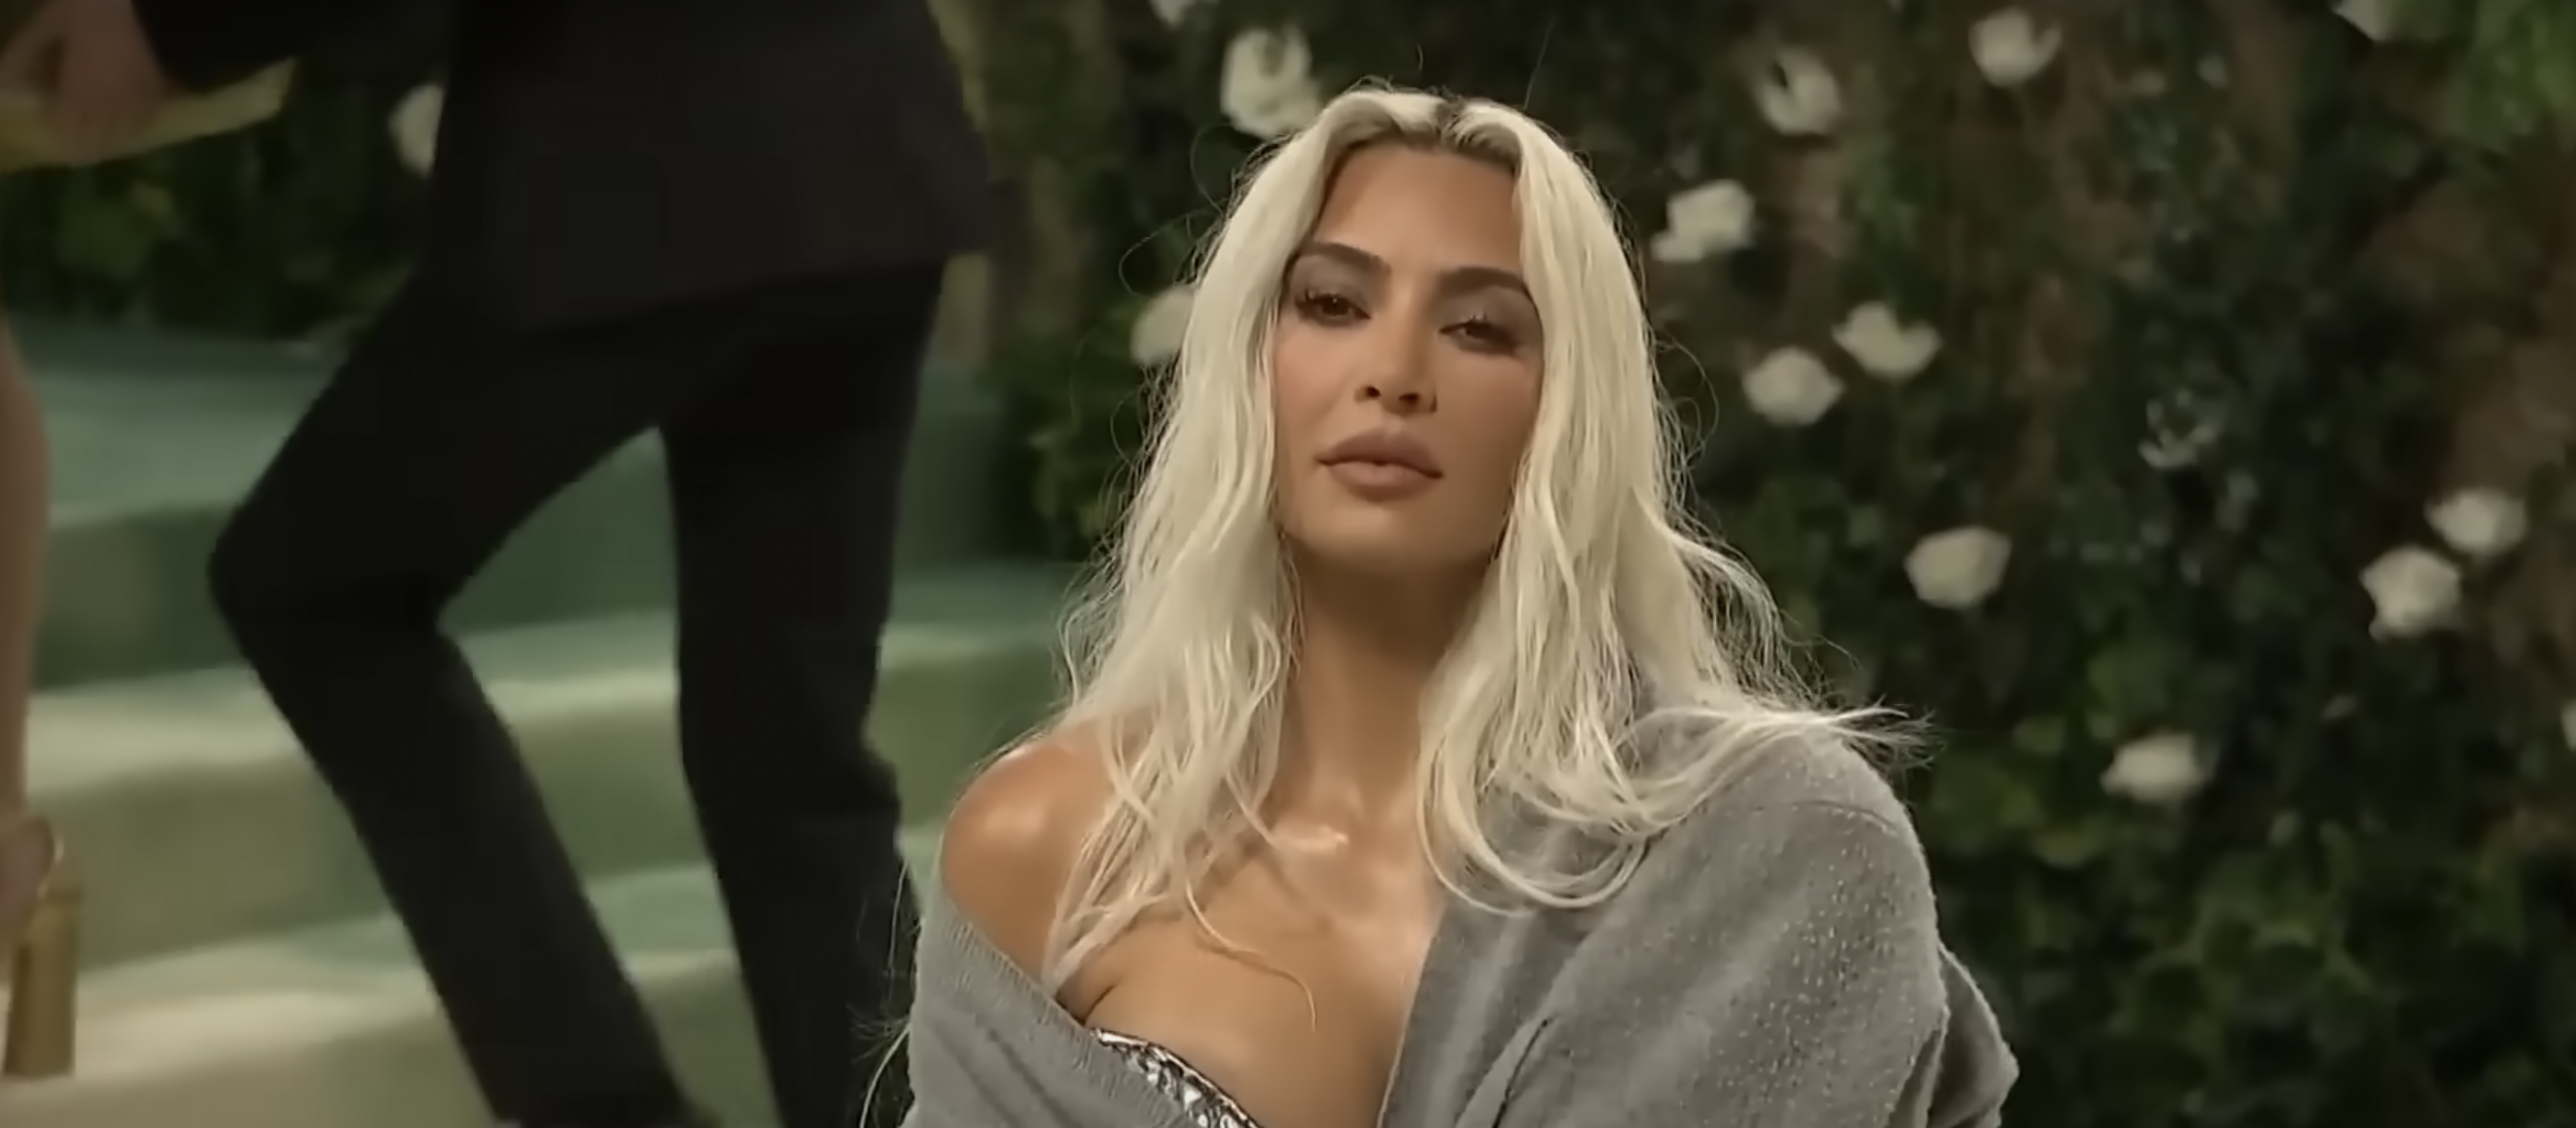 Kim Kardashian Sparks Extreme Concern With ‘Unhealthy’ Met Gala Dress